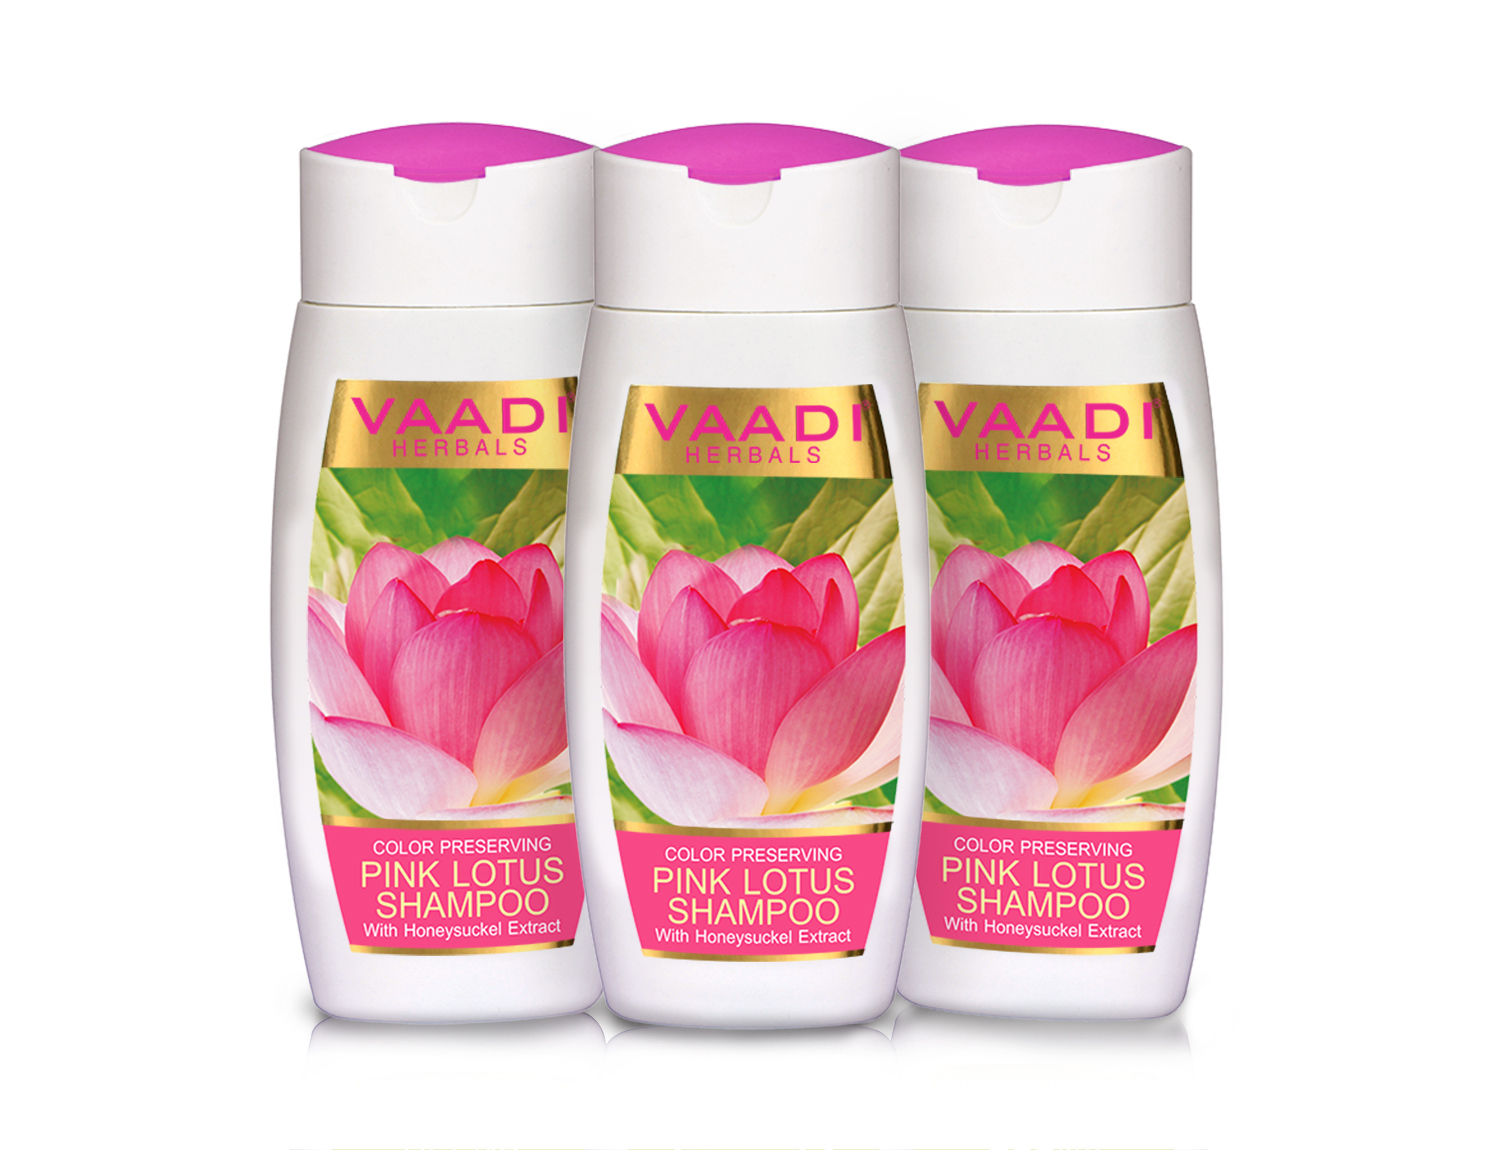 Vaadi Herbals Value Pack Of 3 Pink Lotus Shampoo With Honeysuckel Extract - Color Preserving